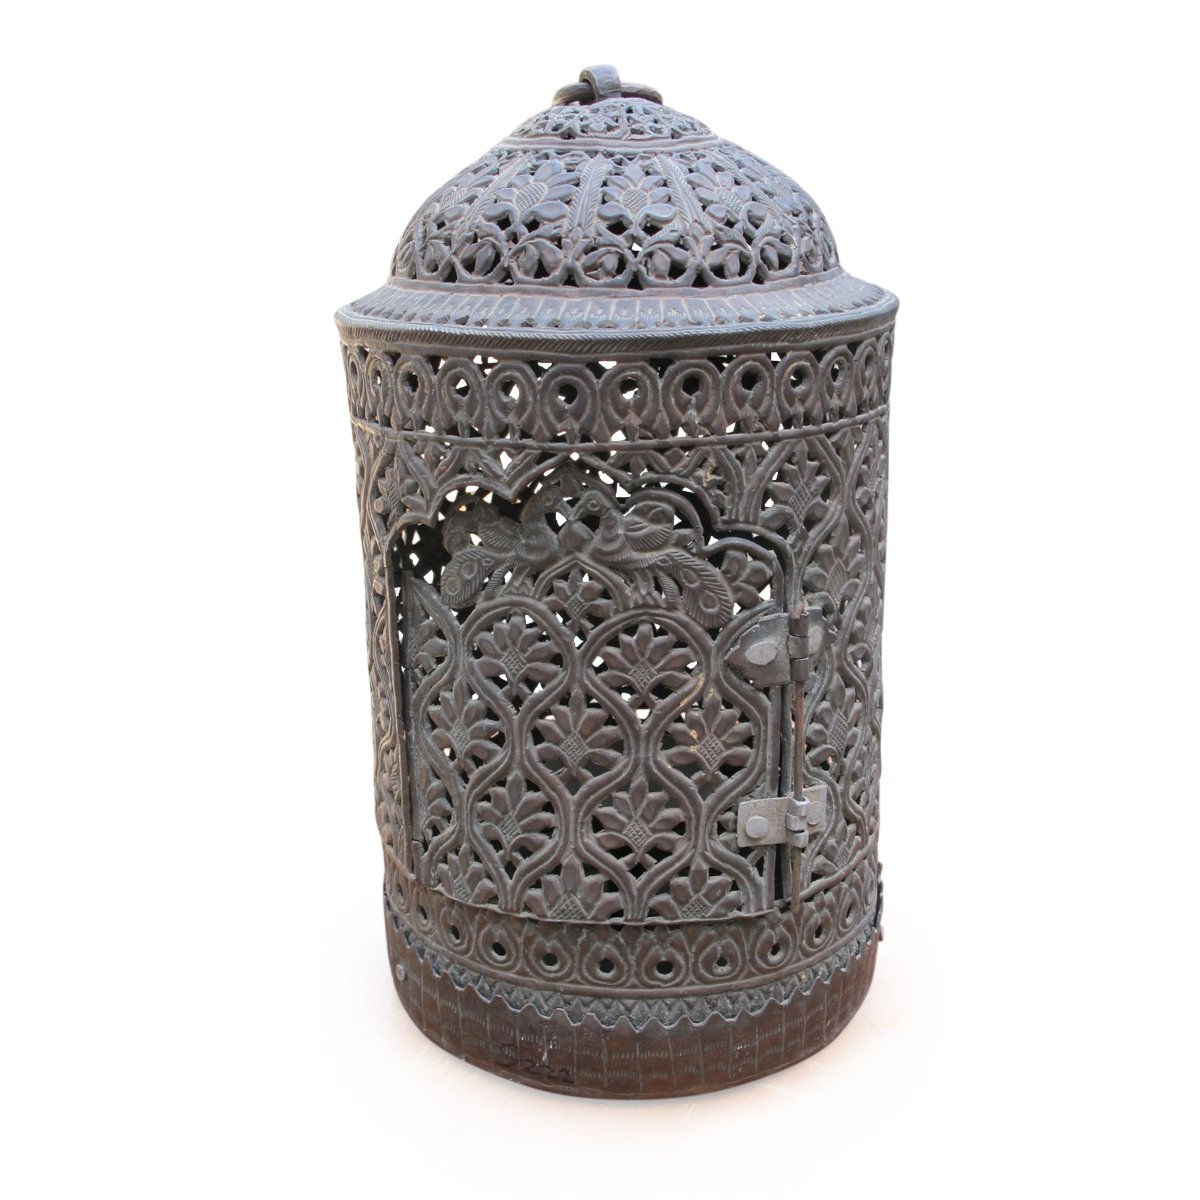 Copper Jali Lantern From Uttar Pradesh - 19Thc - 18 x 18 x 31(w x d x h cms) - A3917